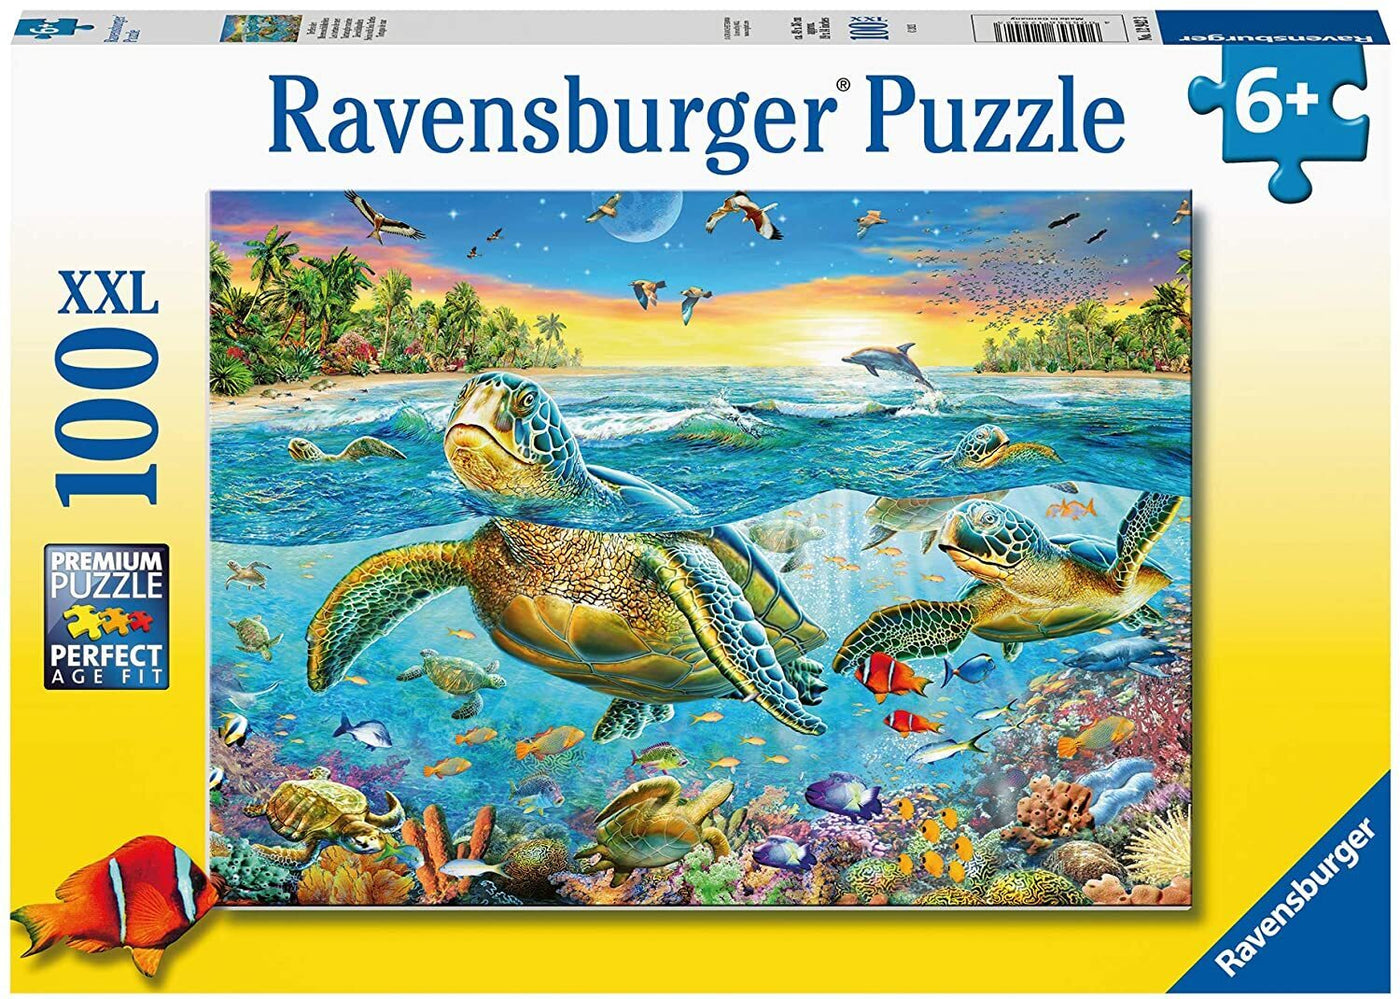 Ravensburger Swim With Sea Turtles Puzzle 100 Pieces